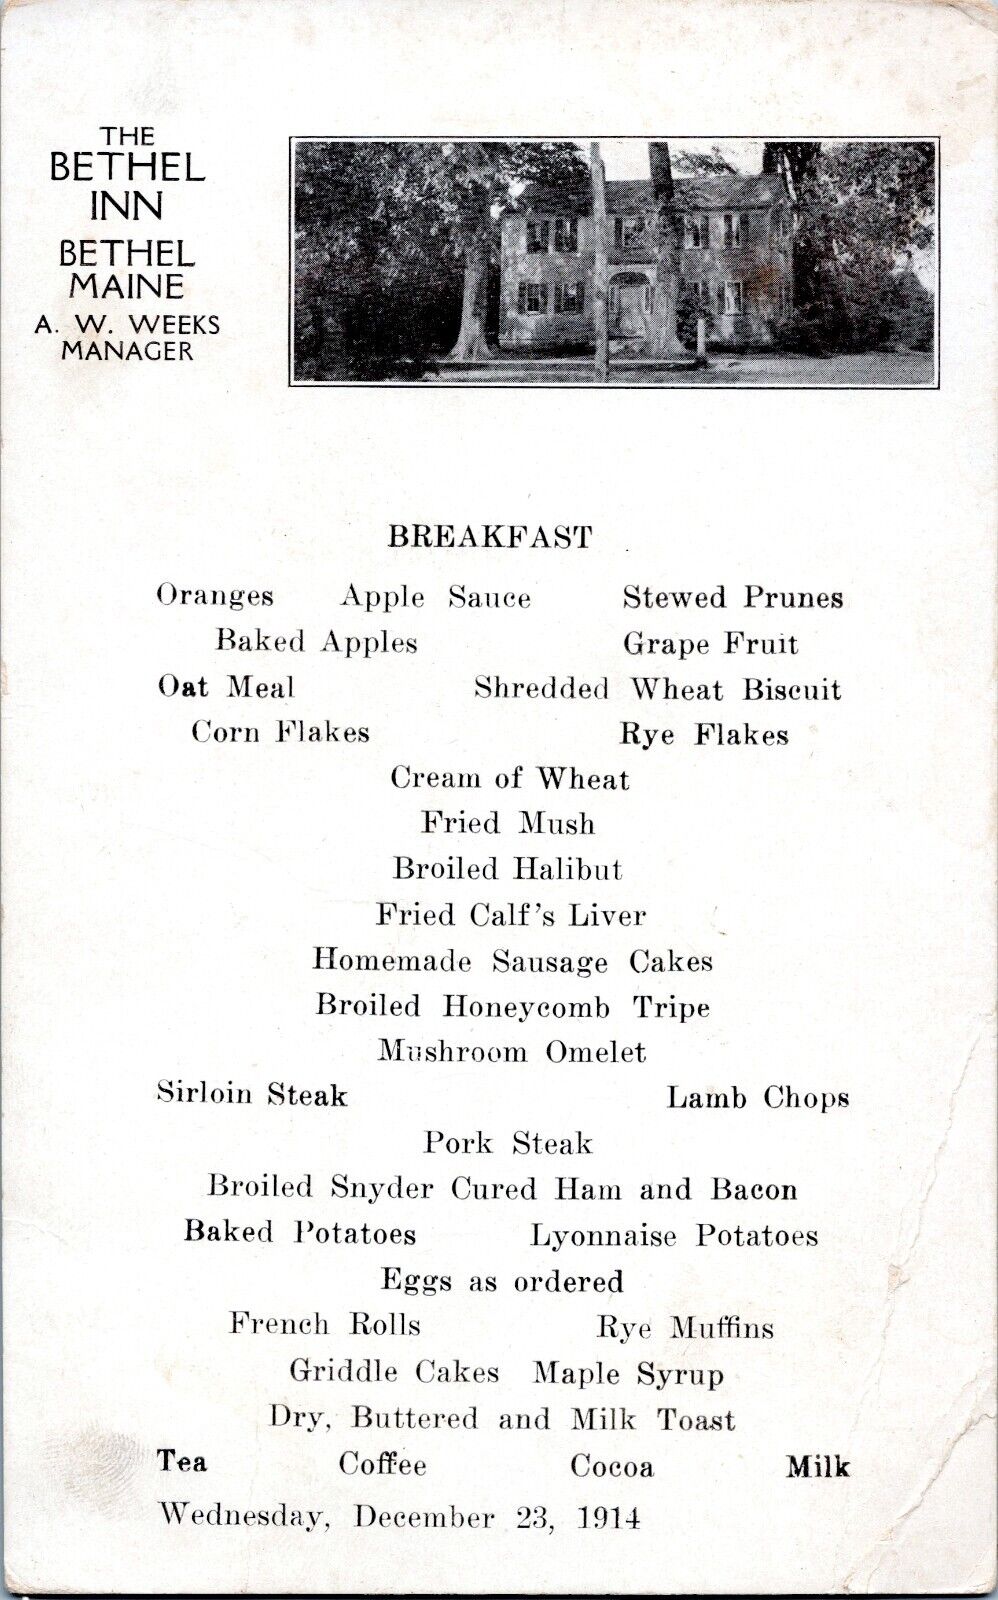 1914 Breakfast Menu - The Bethel Inn, Bethel Maine- 4.25 x 7 inches - Blank Back